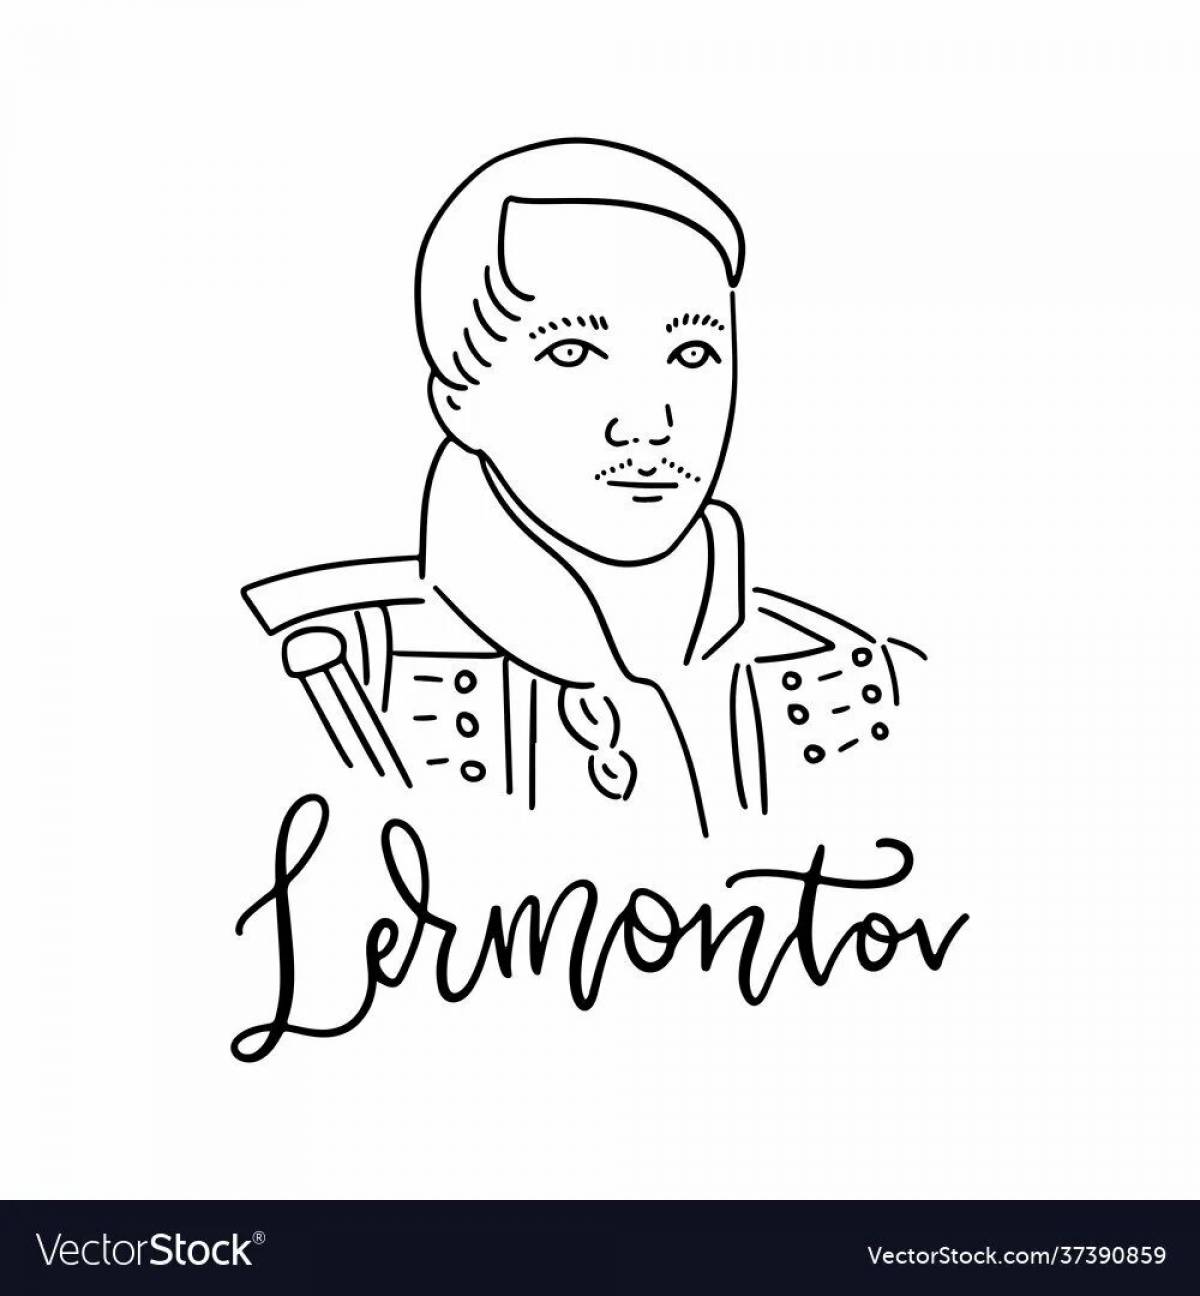 Lermontov #1